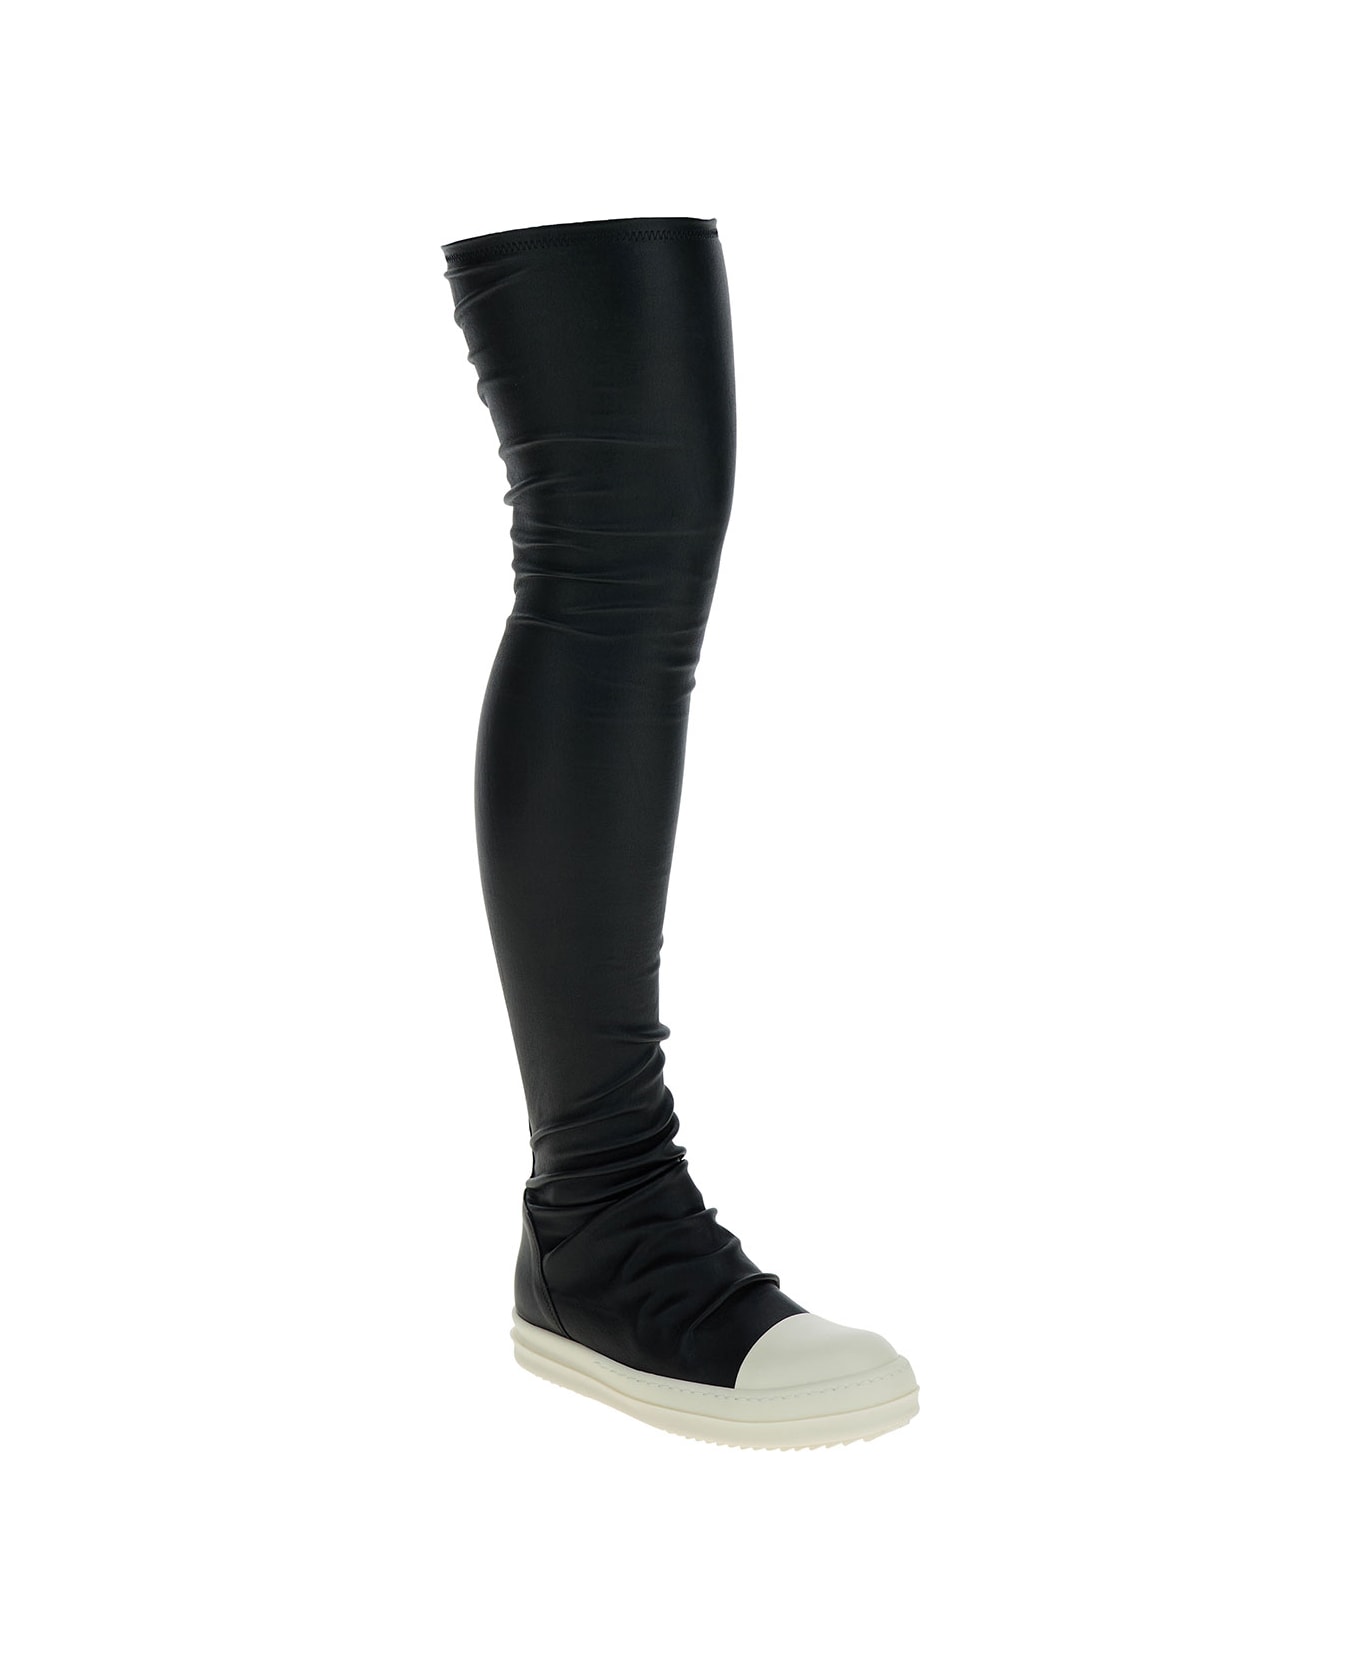 Rick Owens Black Knee-high Sneakers With Platform In Leather Woman - Black